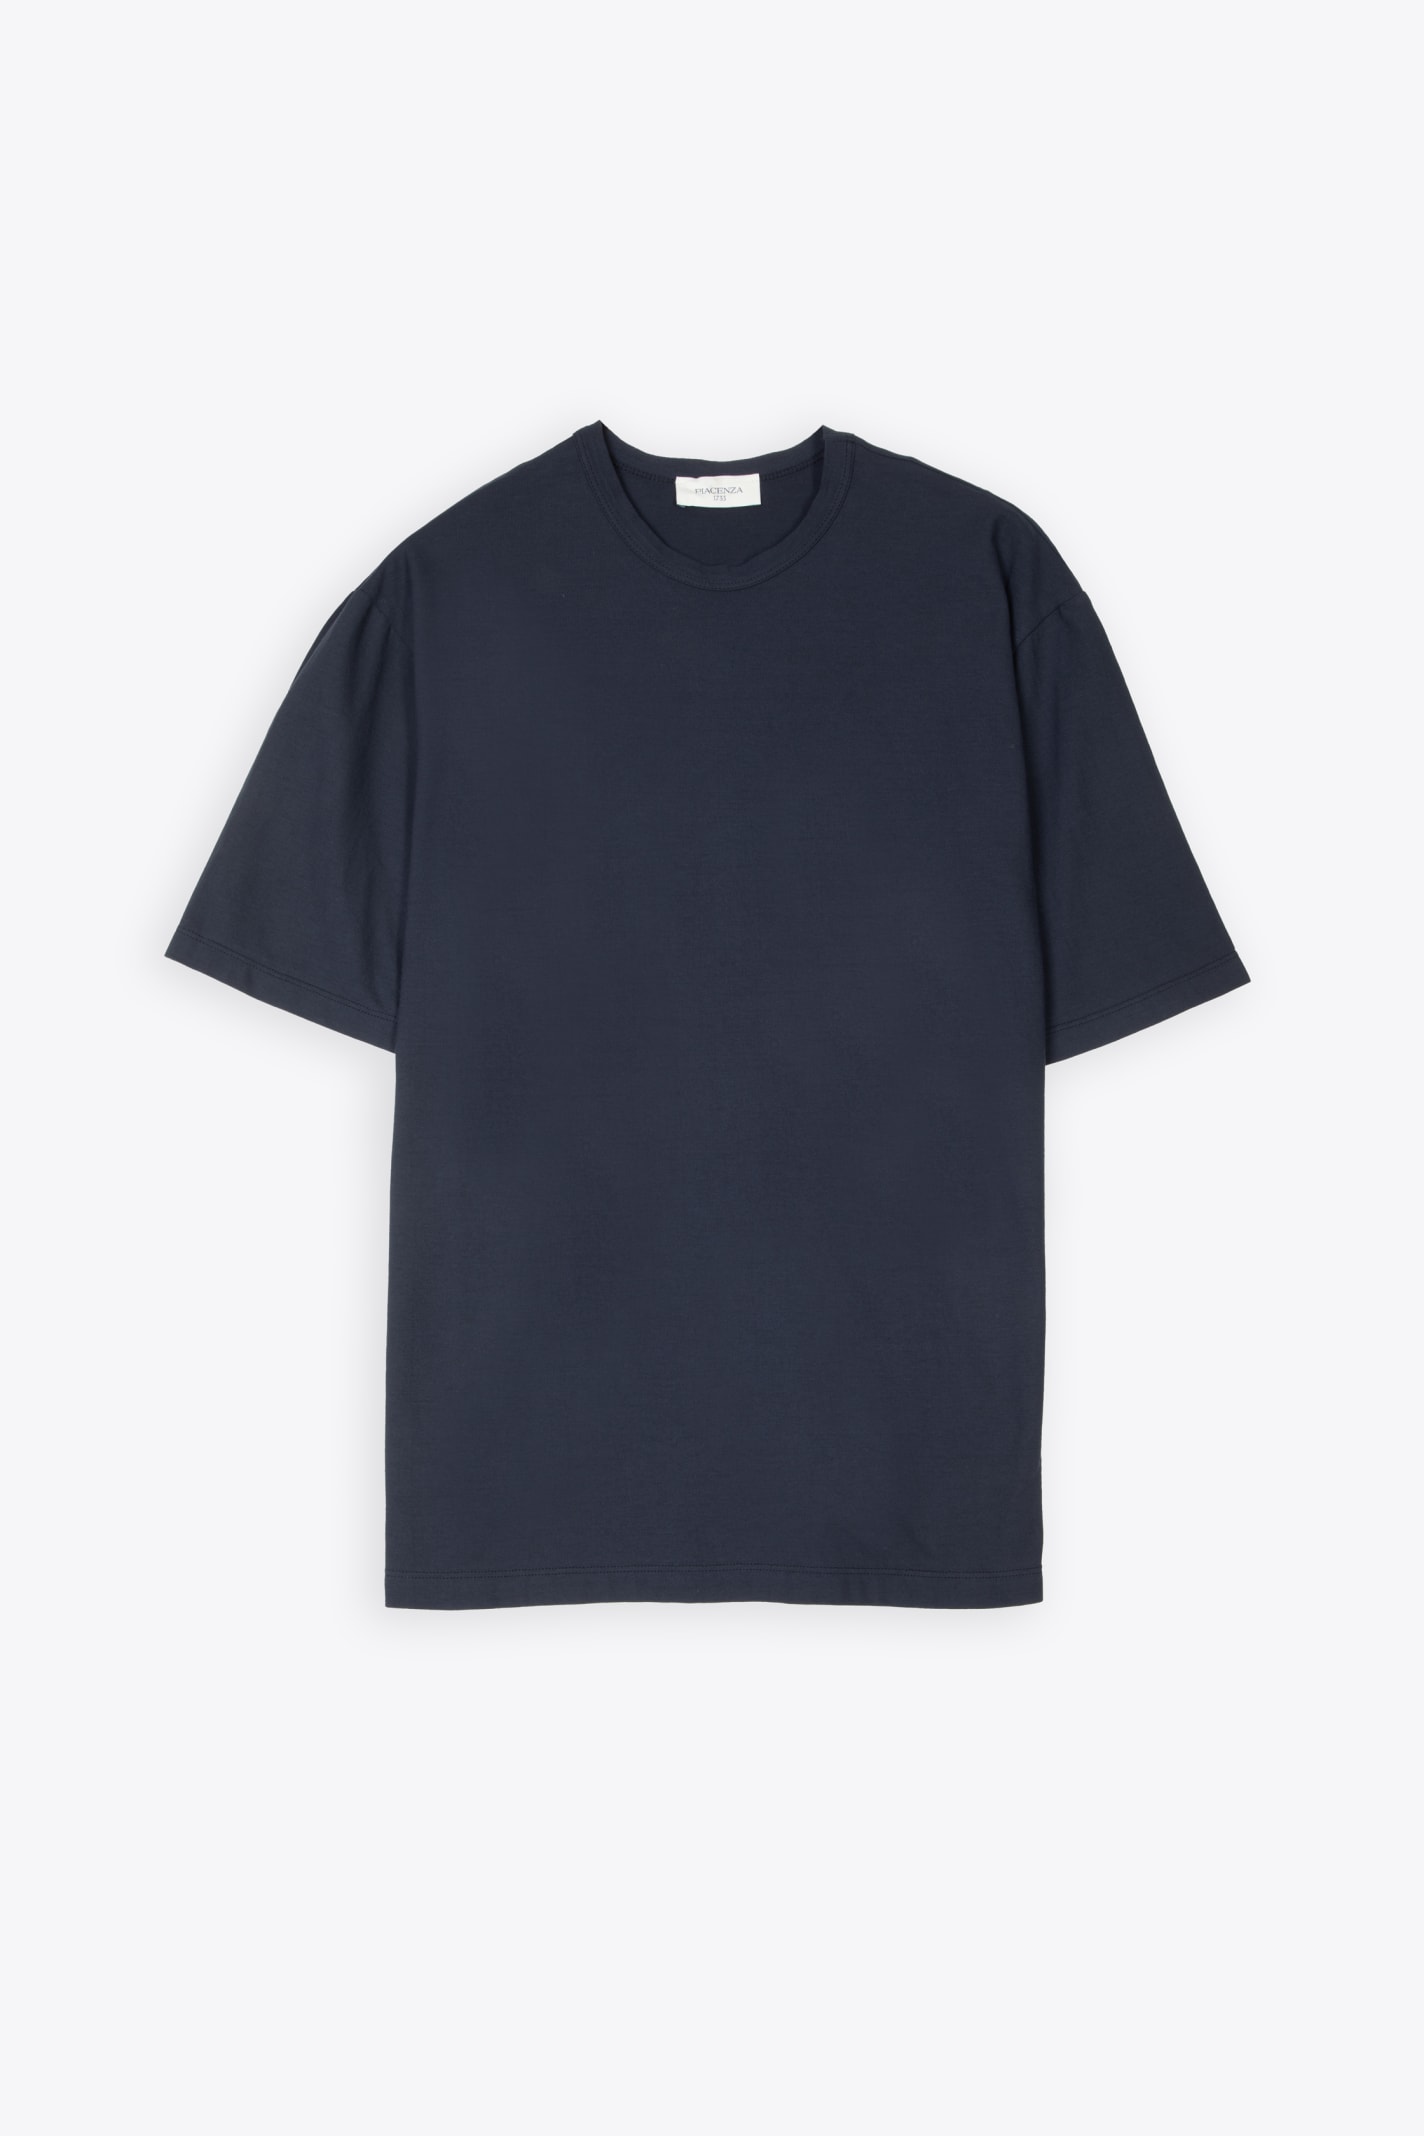 Piacenza Cashmere T-shirt Dark Blue Lightweight Cotton T-shirt